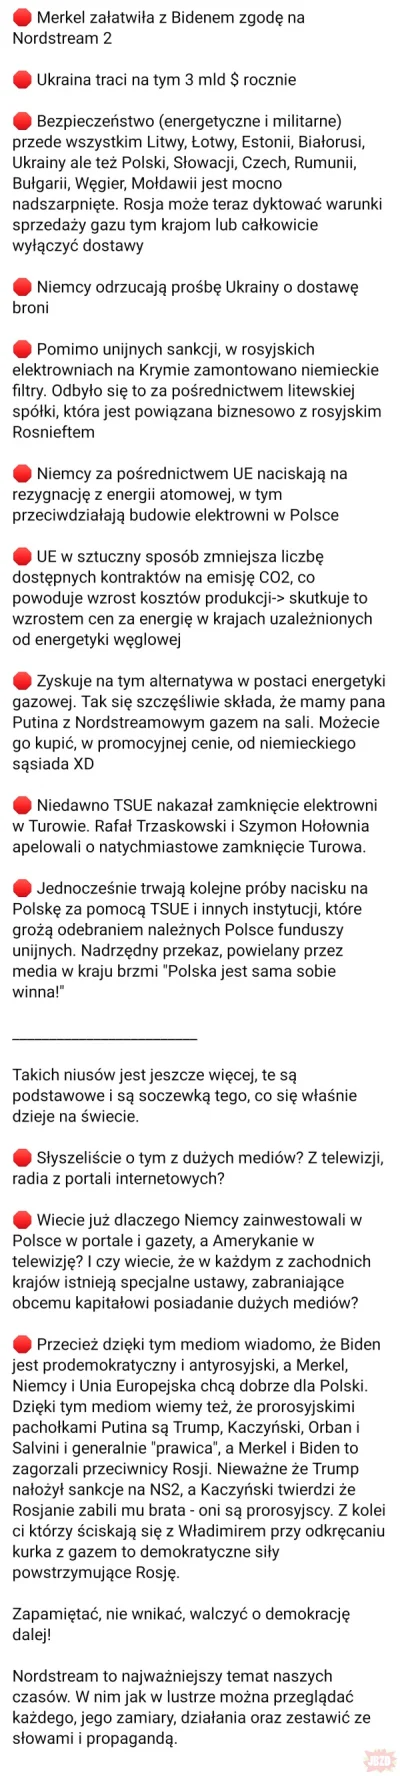 enforcer - #polska #usa #niemcy #rosja